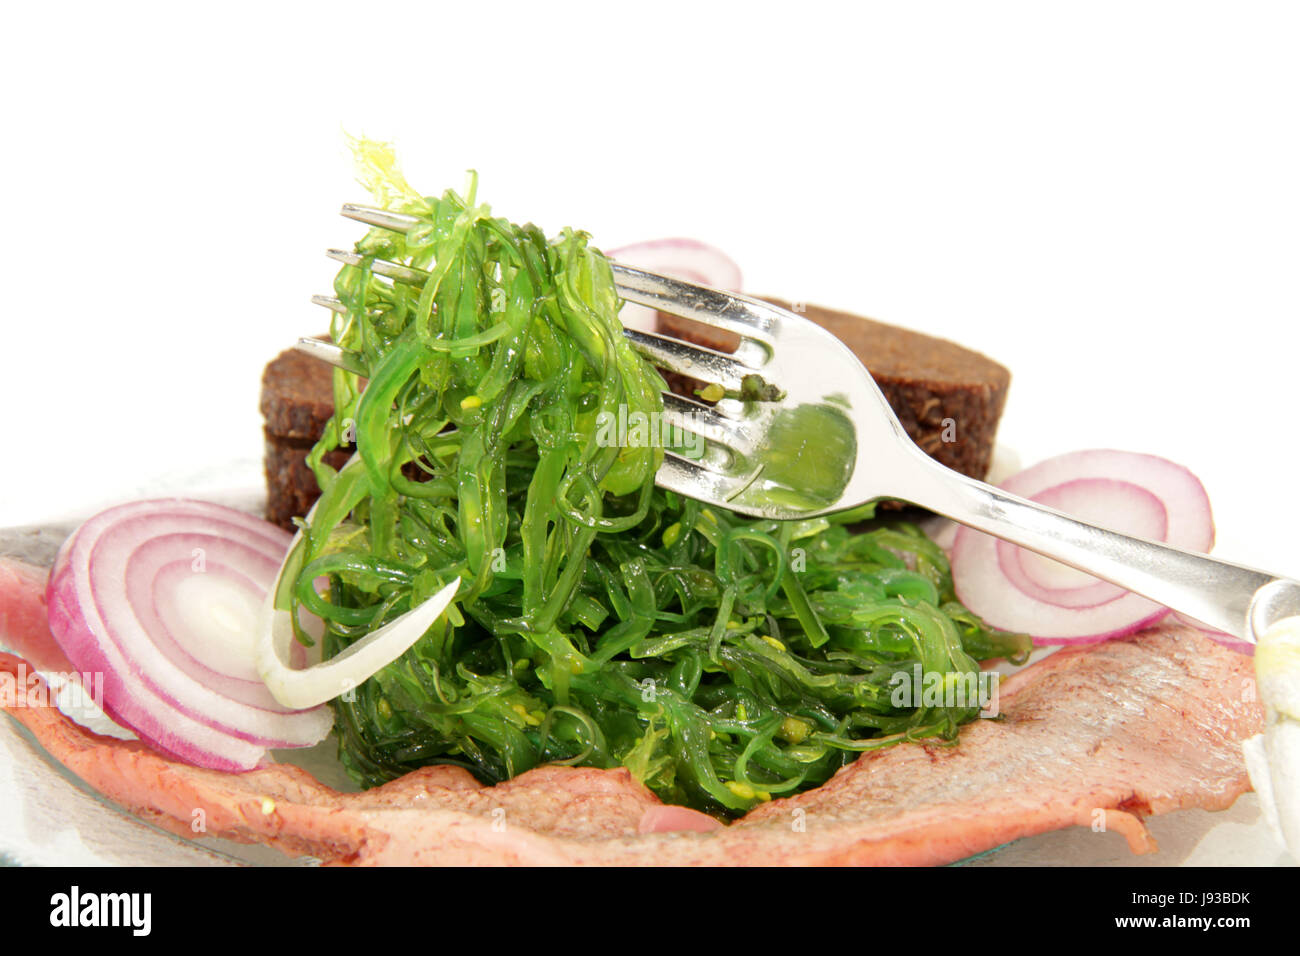 matjeshering to seaweed salad Stock Photo